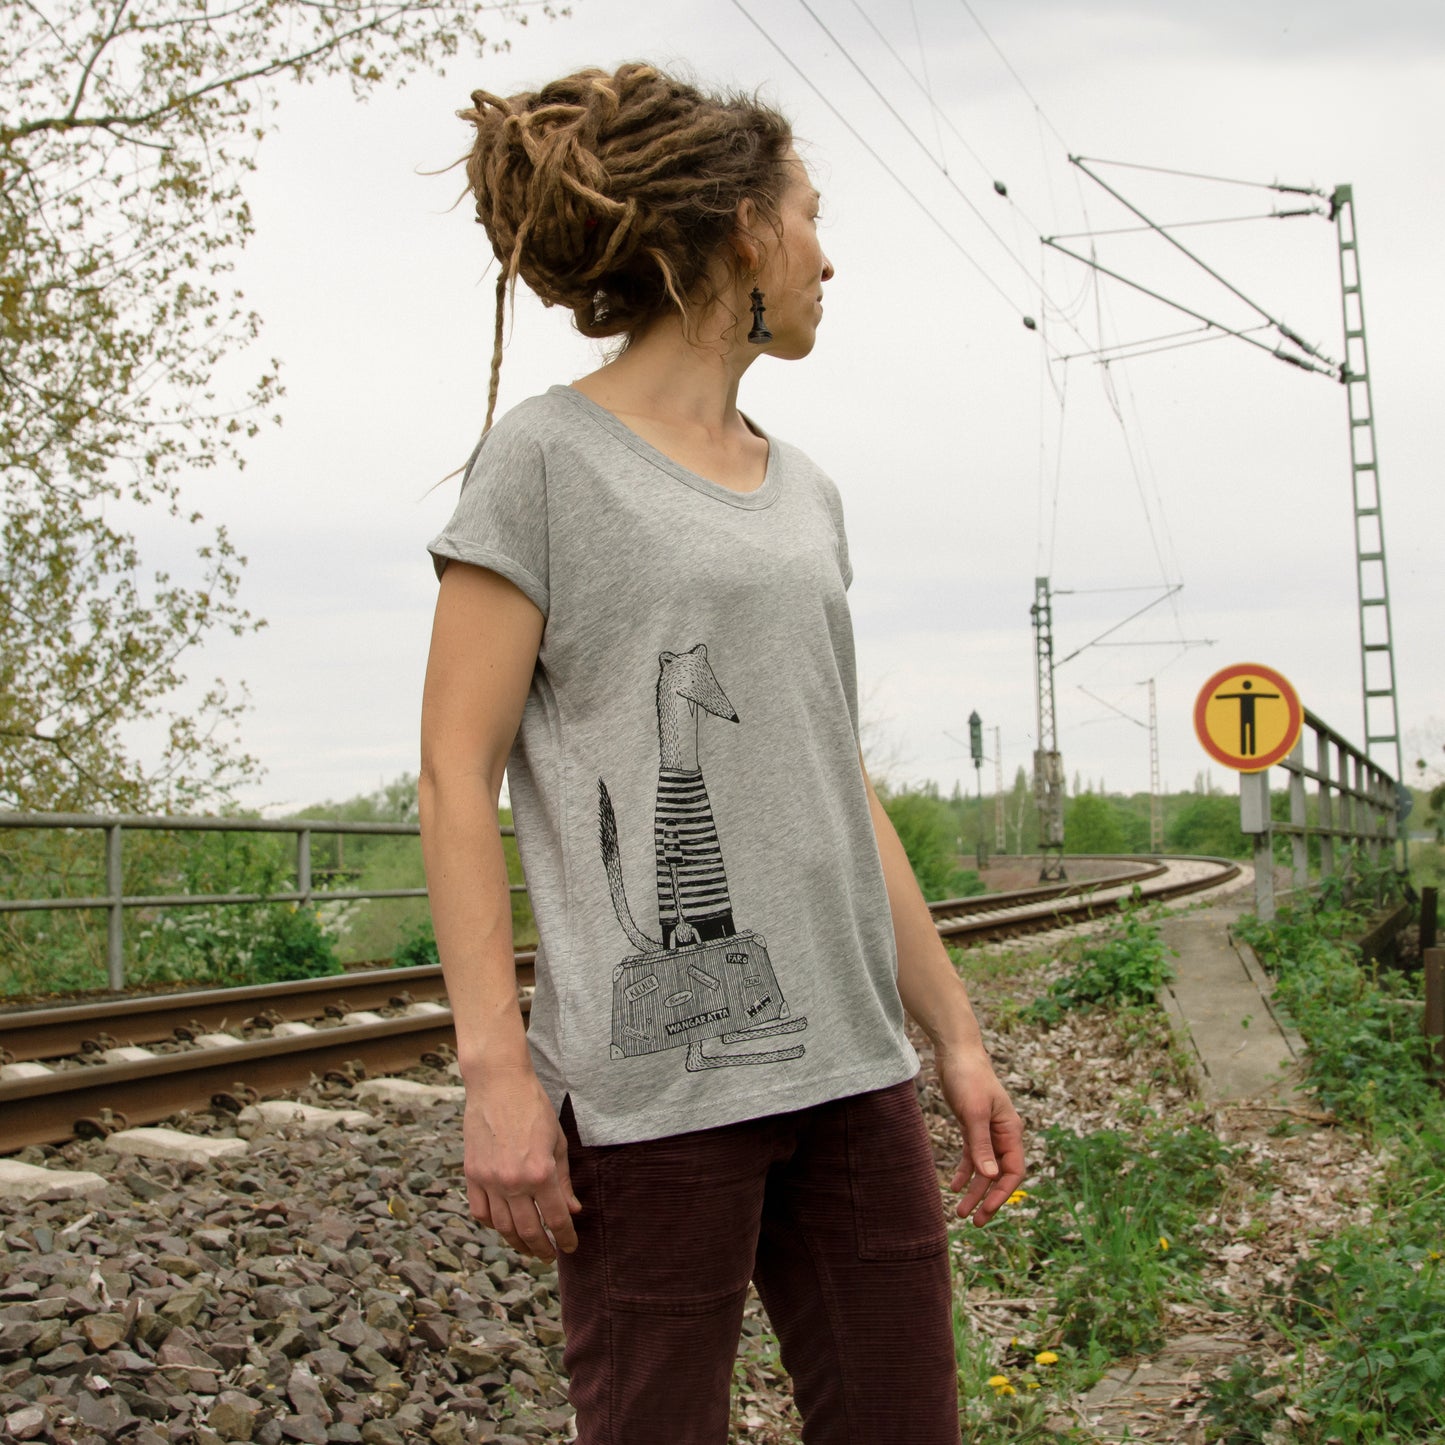 Reisewiesel T-Shirt in heather grey XS, S